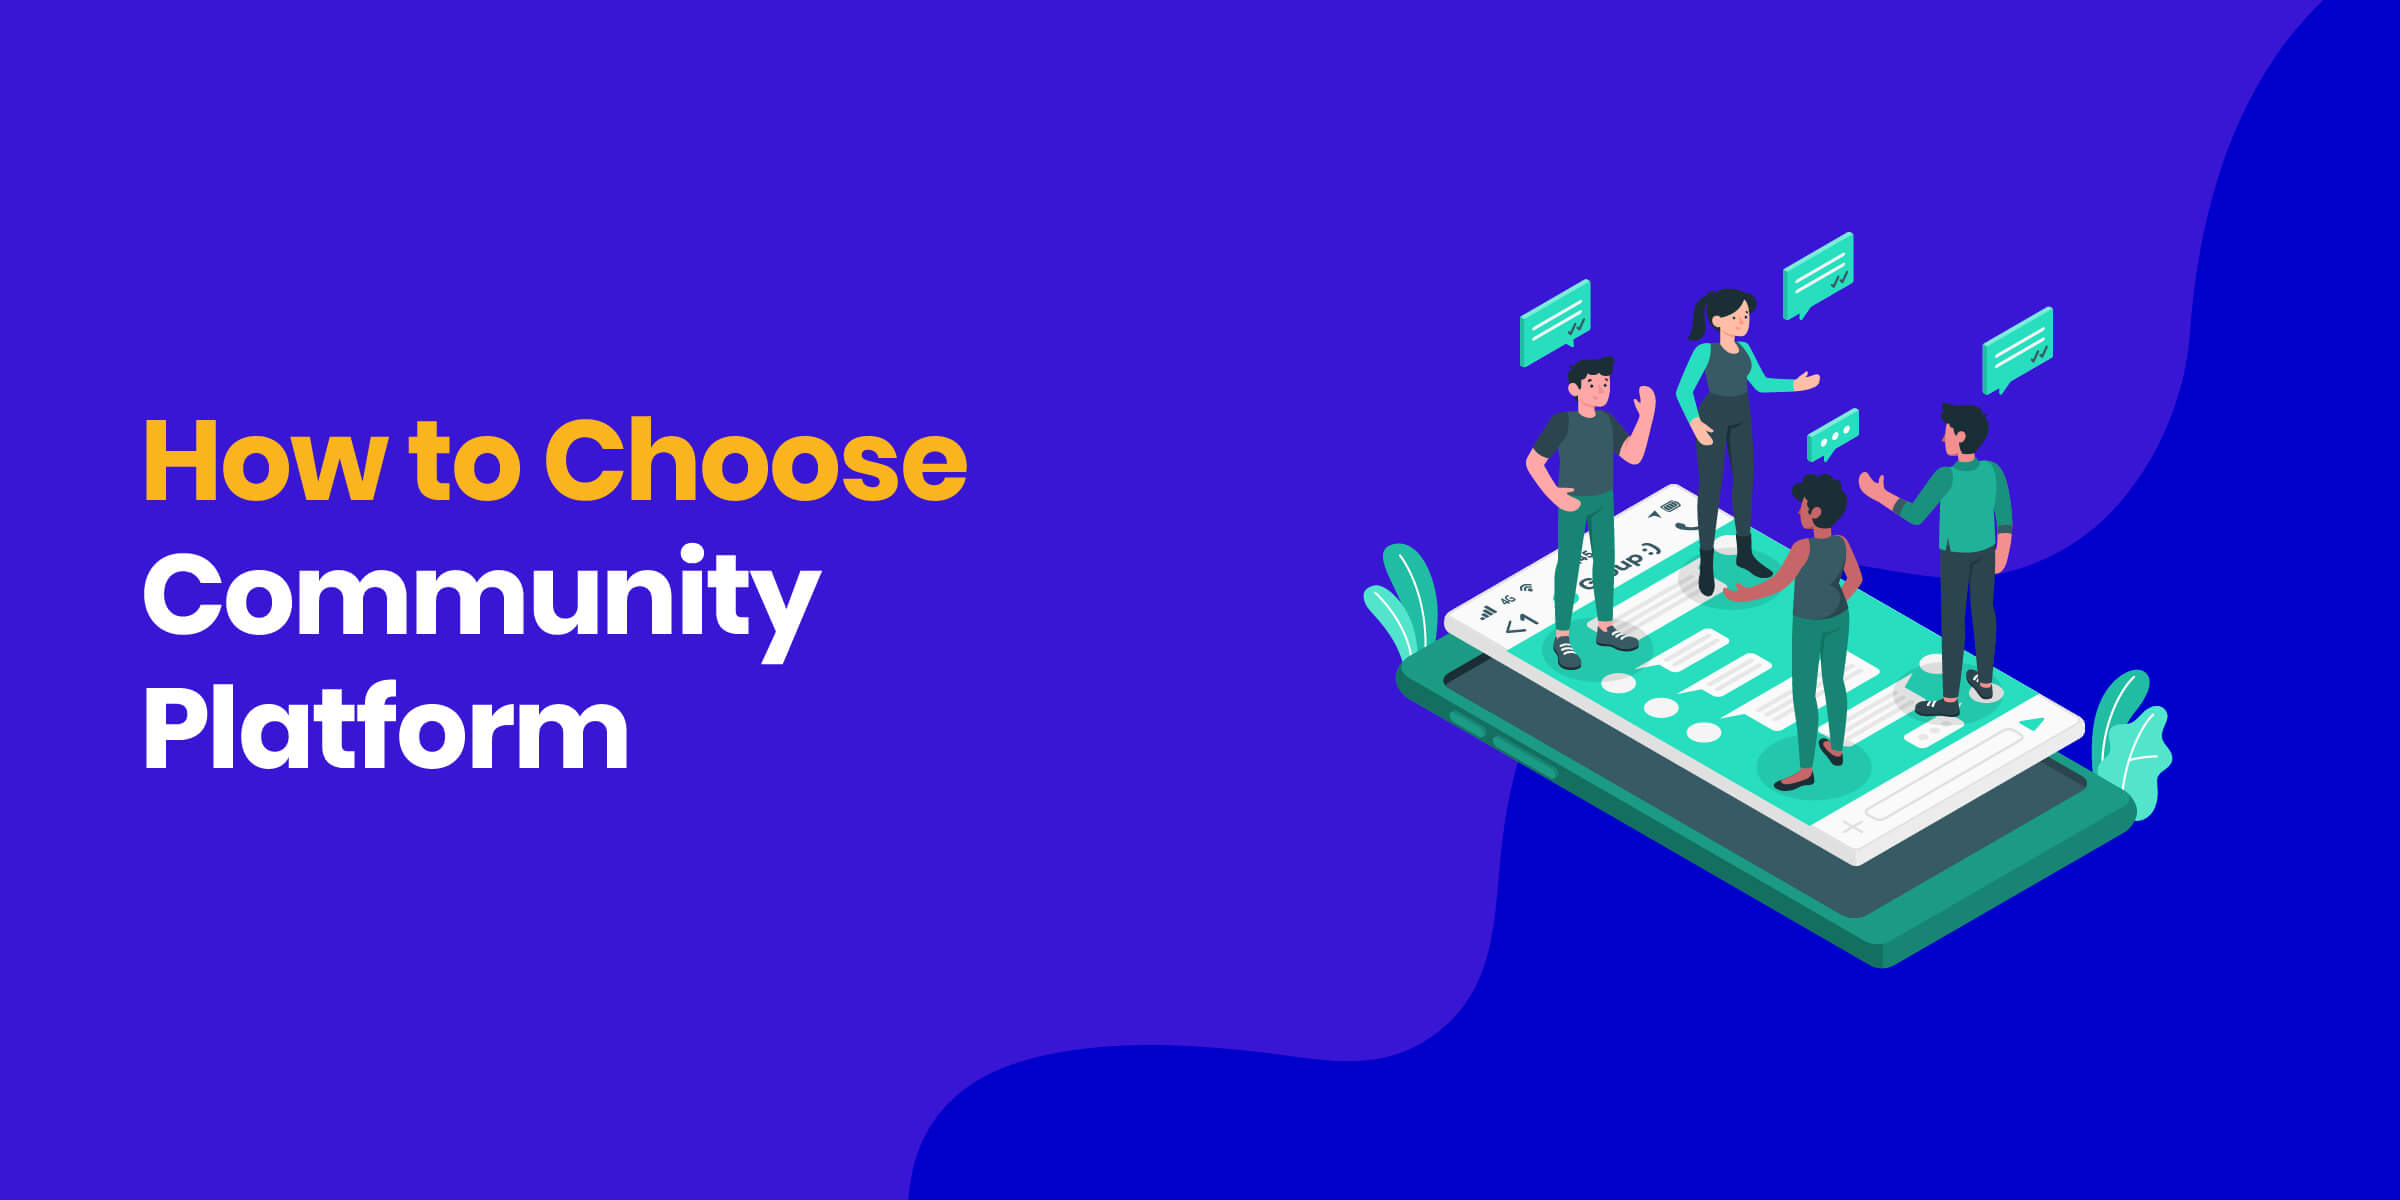 How to Choose Community Platform